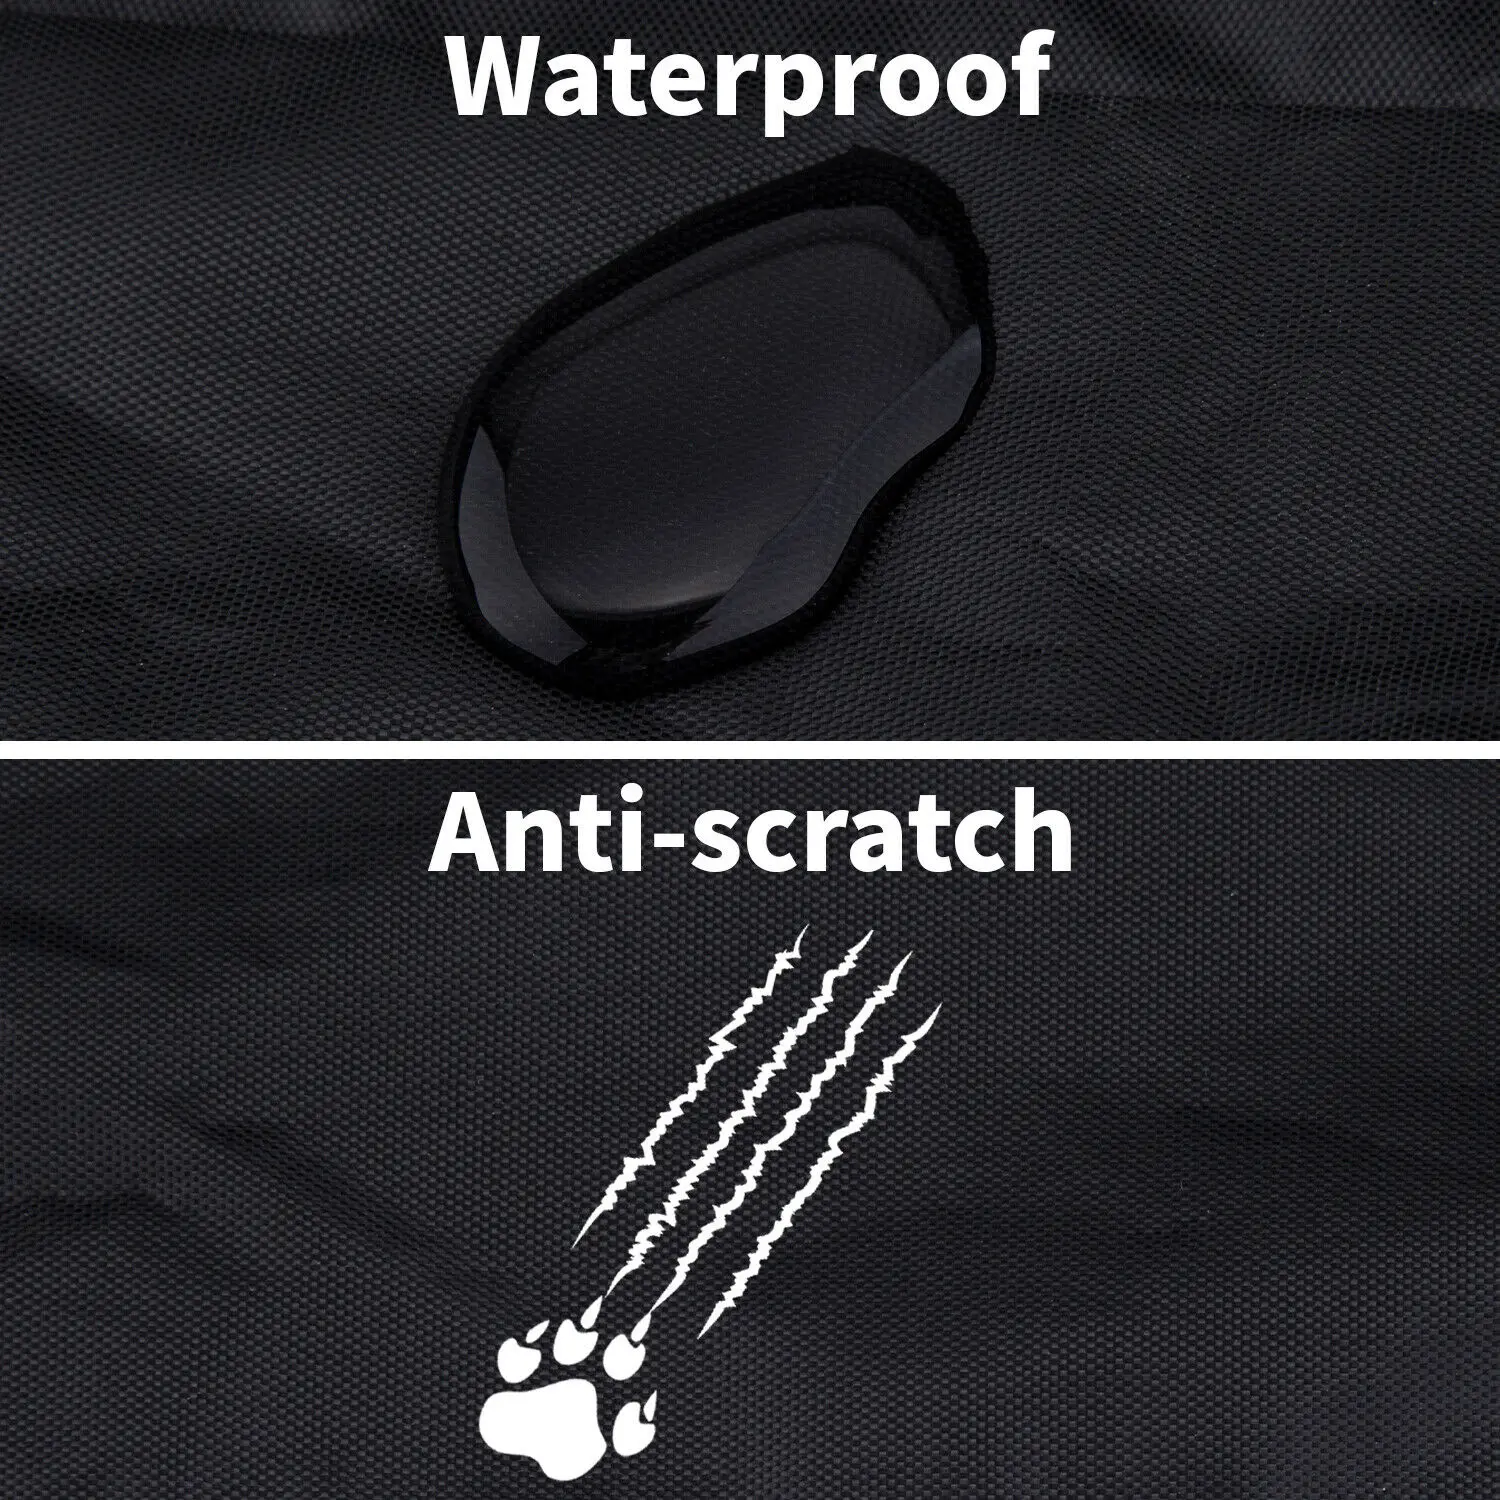 Universal Waterproof Car Rear Back Seat Protector Cover Pet Dog Protector Waterproof Cover For SUV Vehicle Auto Seat